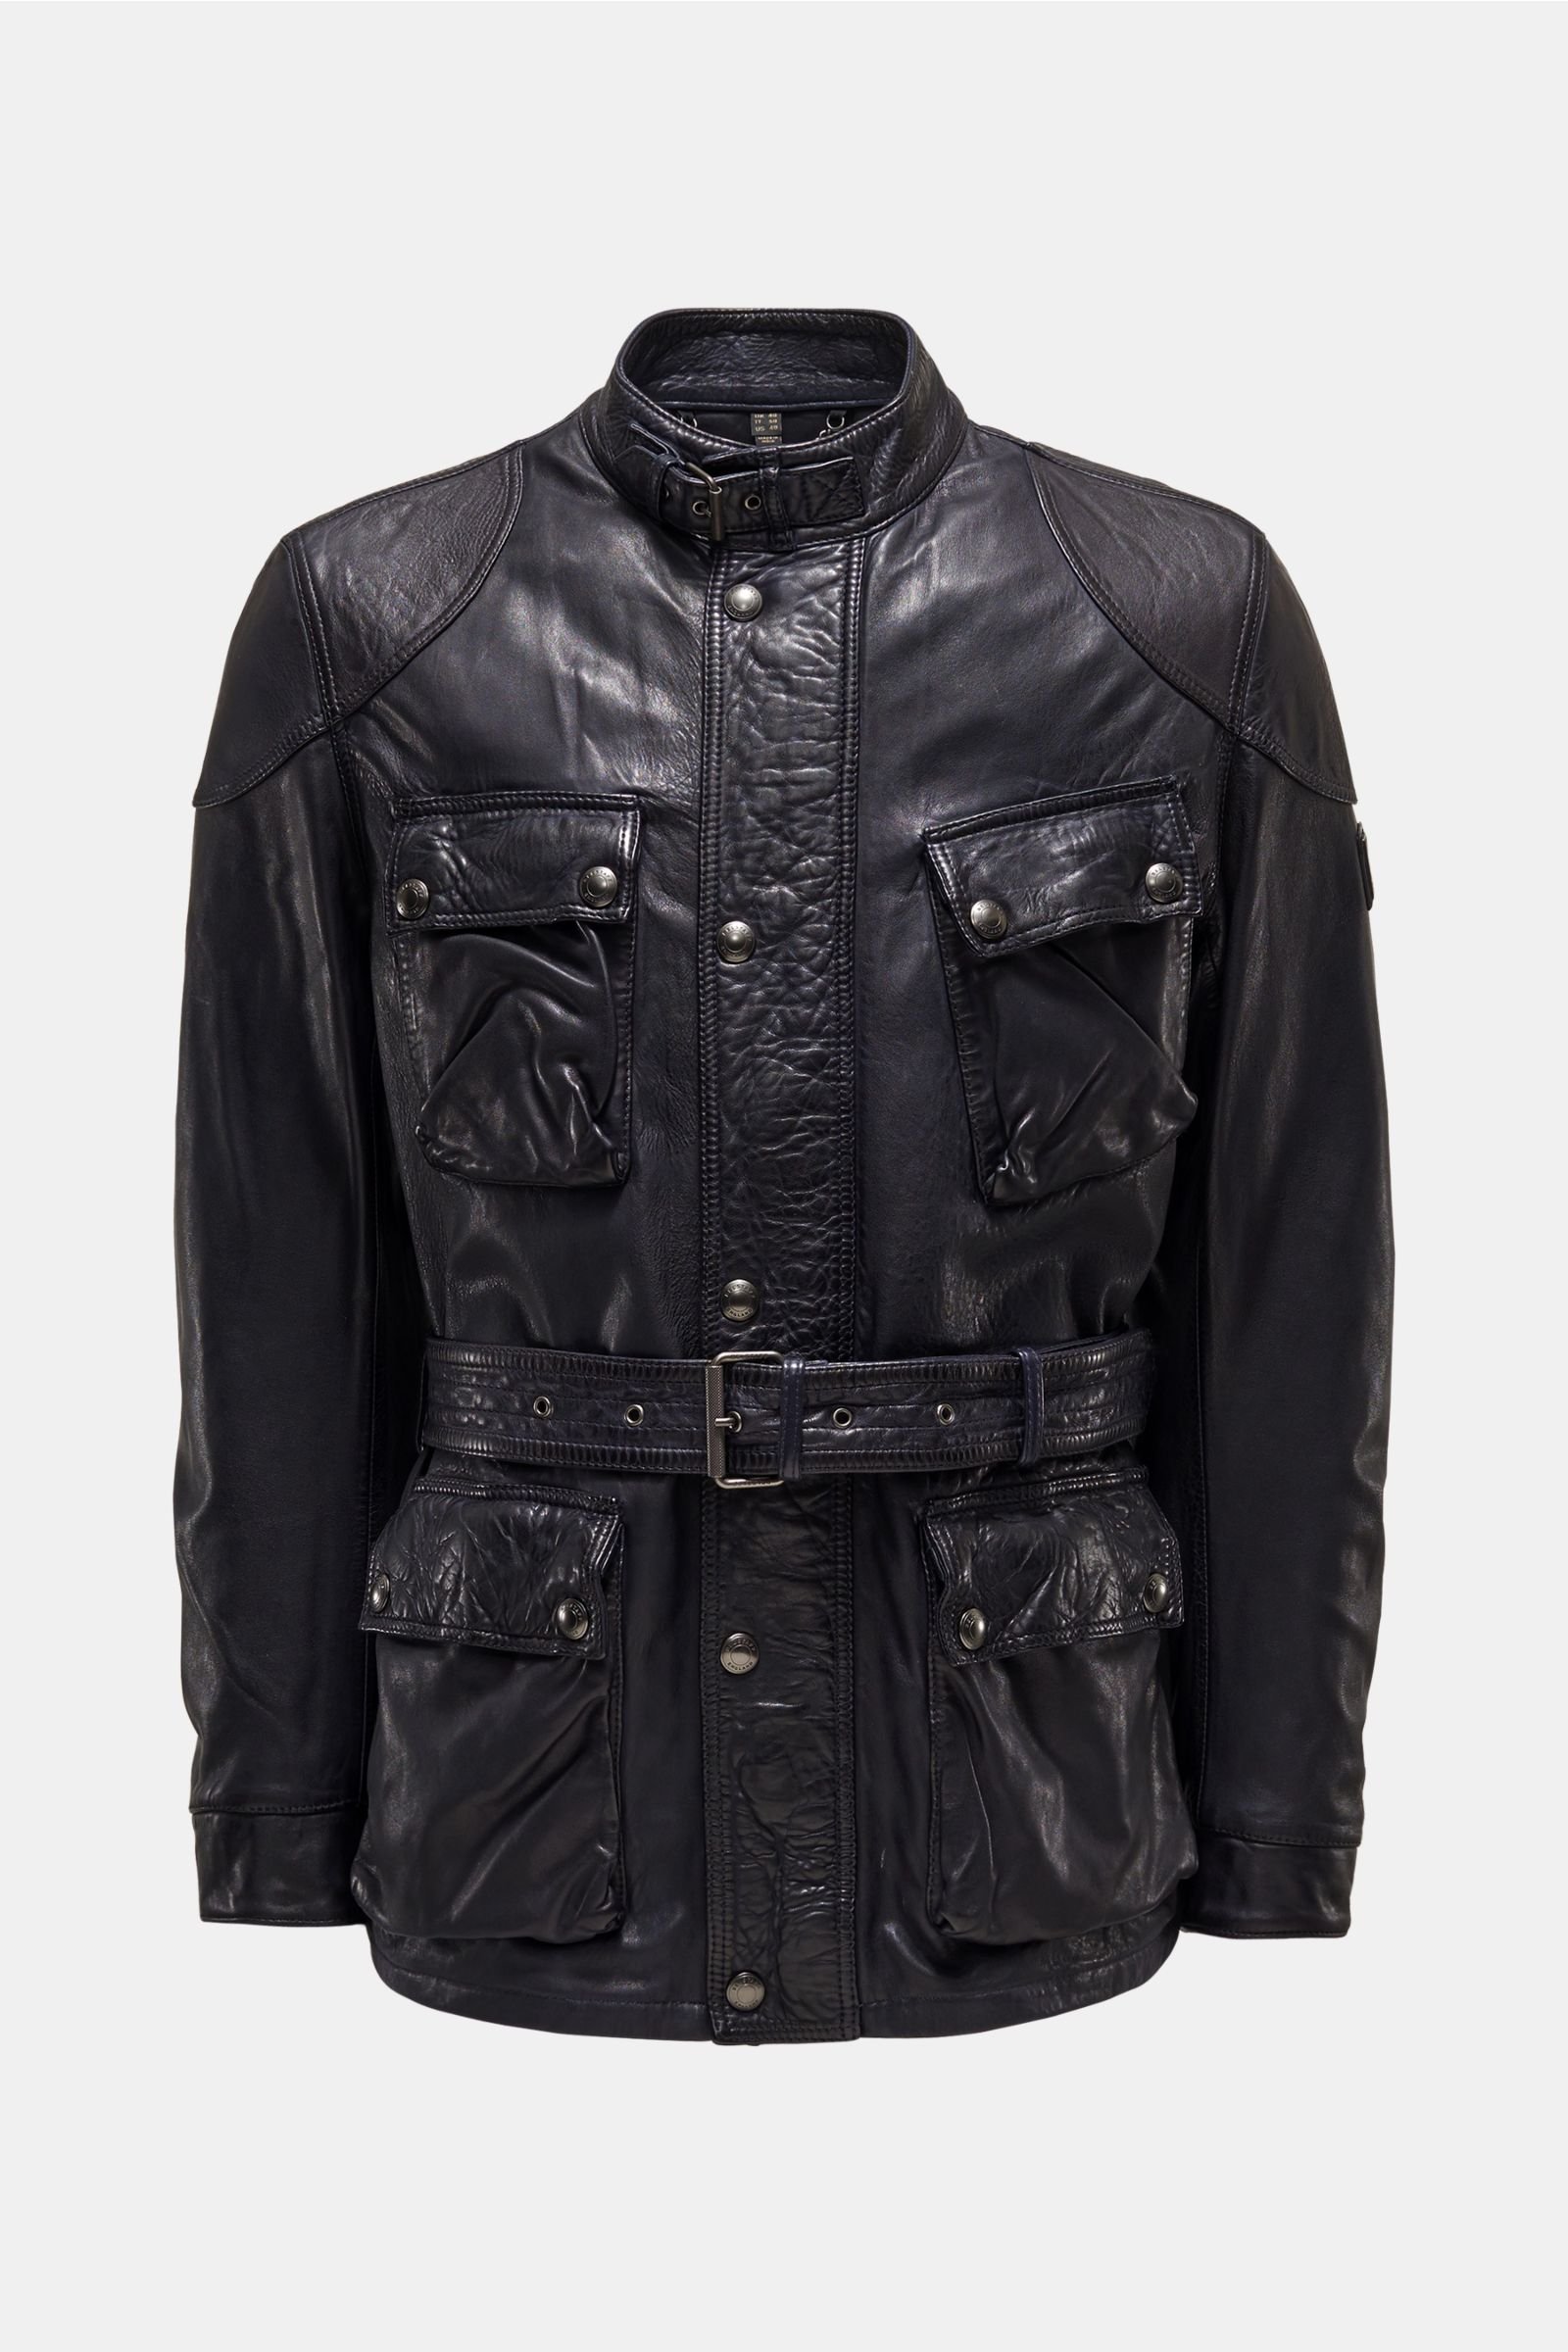 Leather jacket 'Trialmaster Panther' dark navy